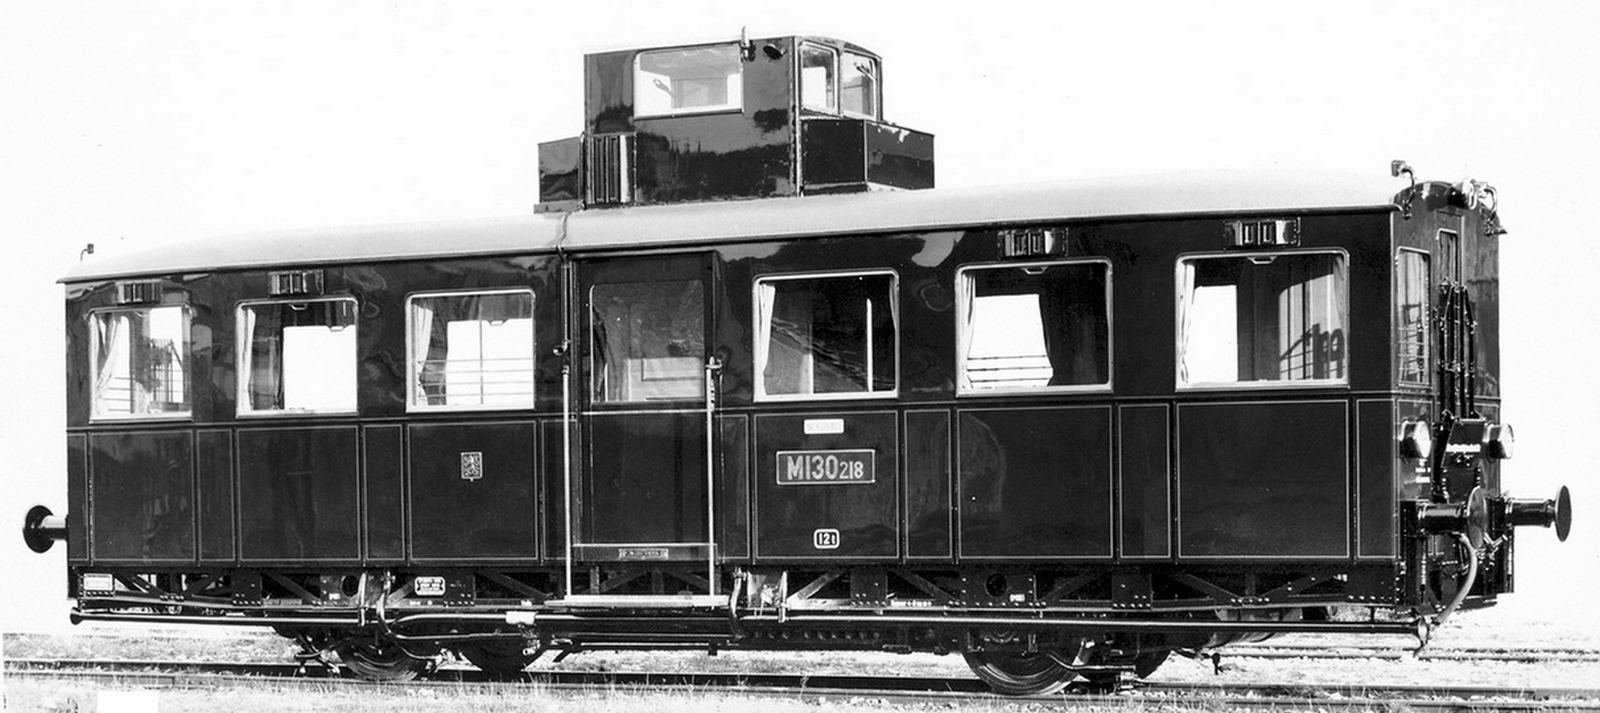 M 130.2 railcar on a Tatra works photo